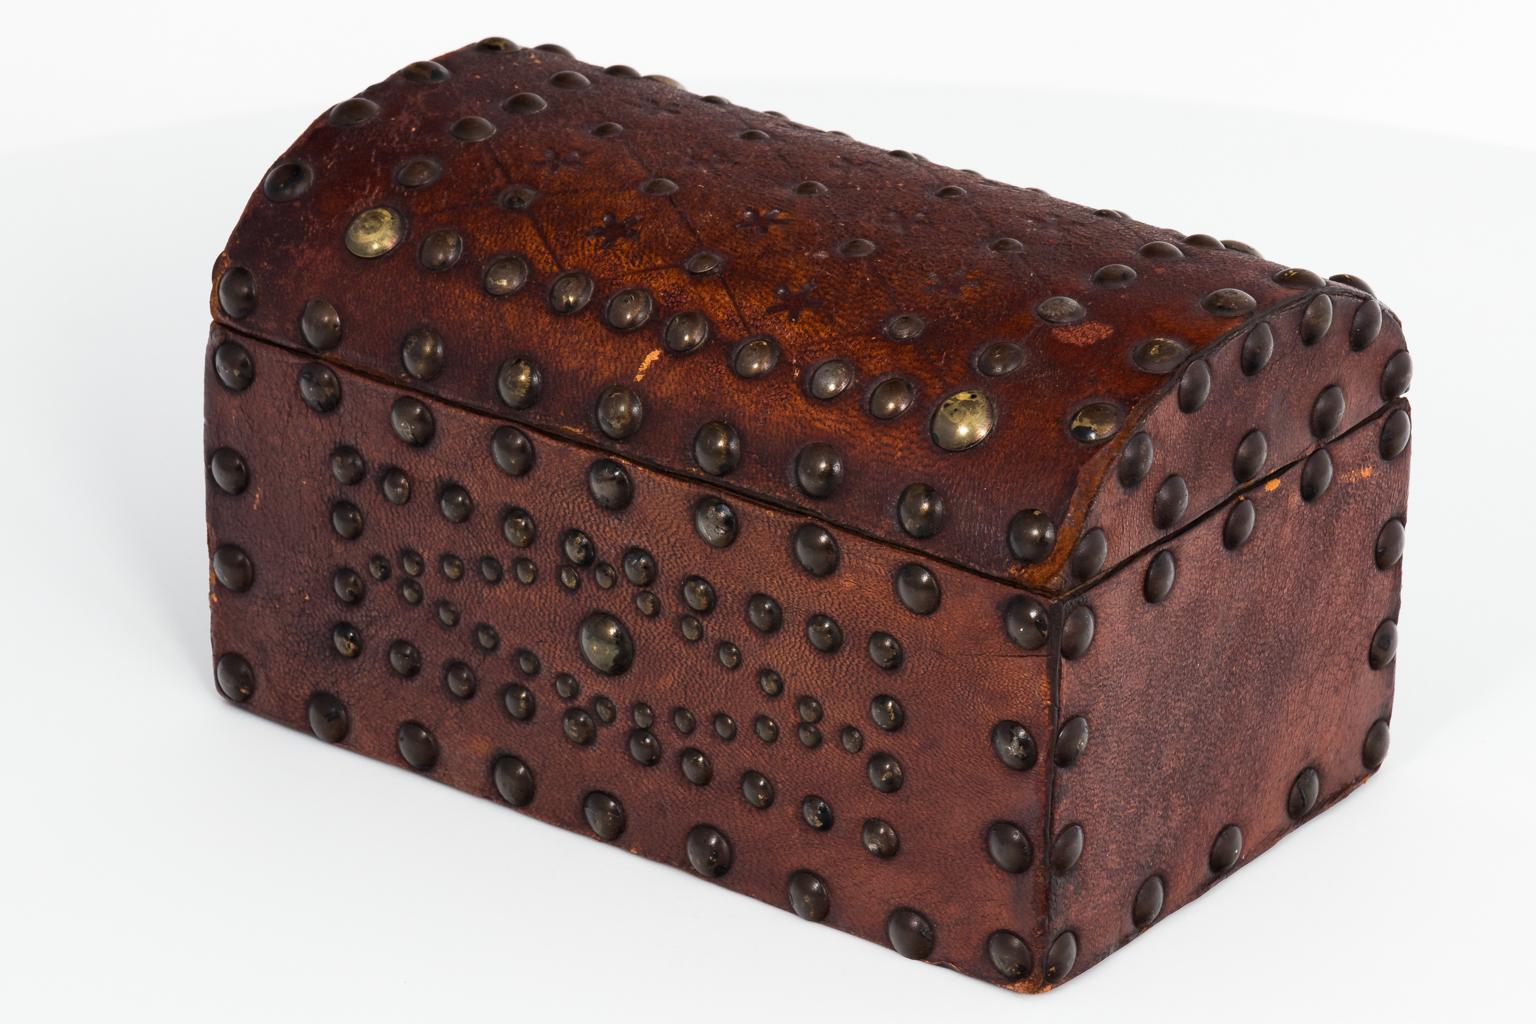 English leather box with brass nailhead studs in lozenge designs, circa 1850.
 